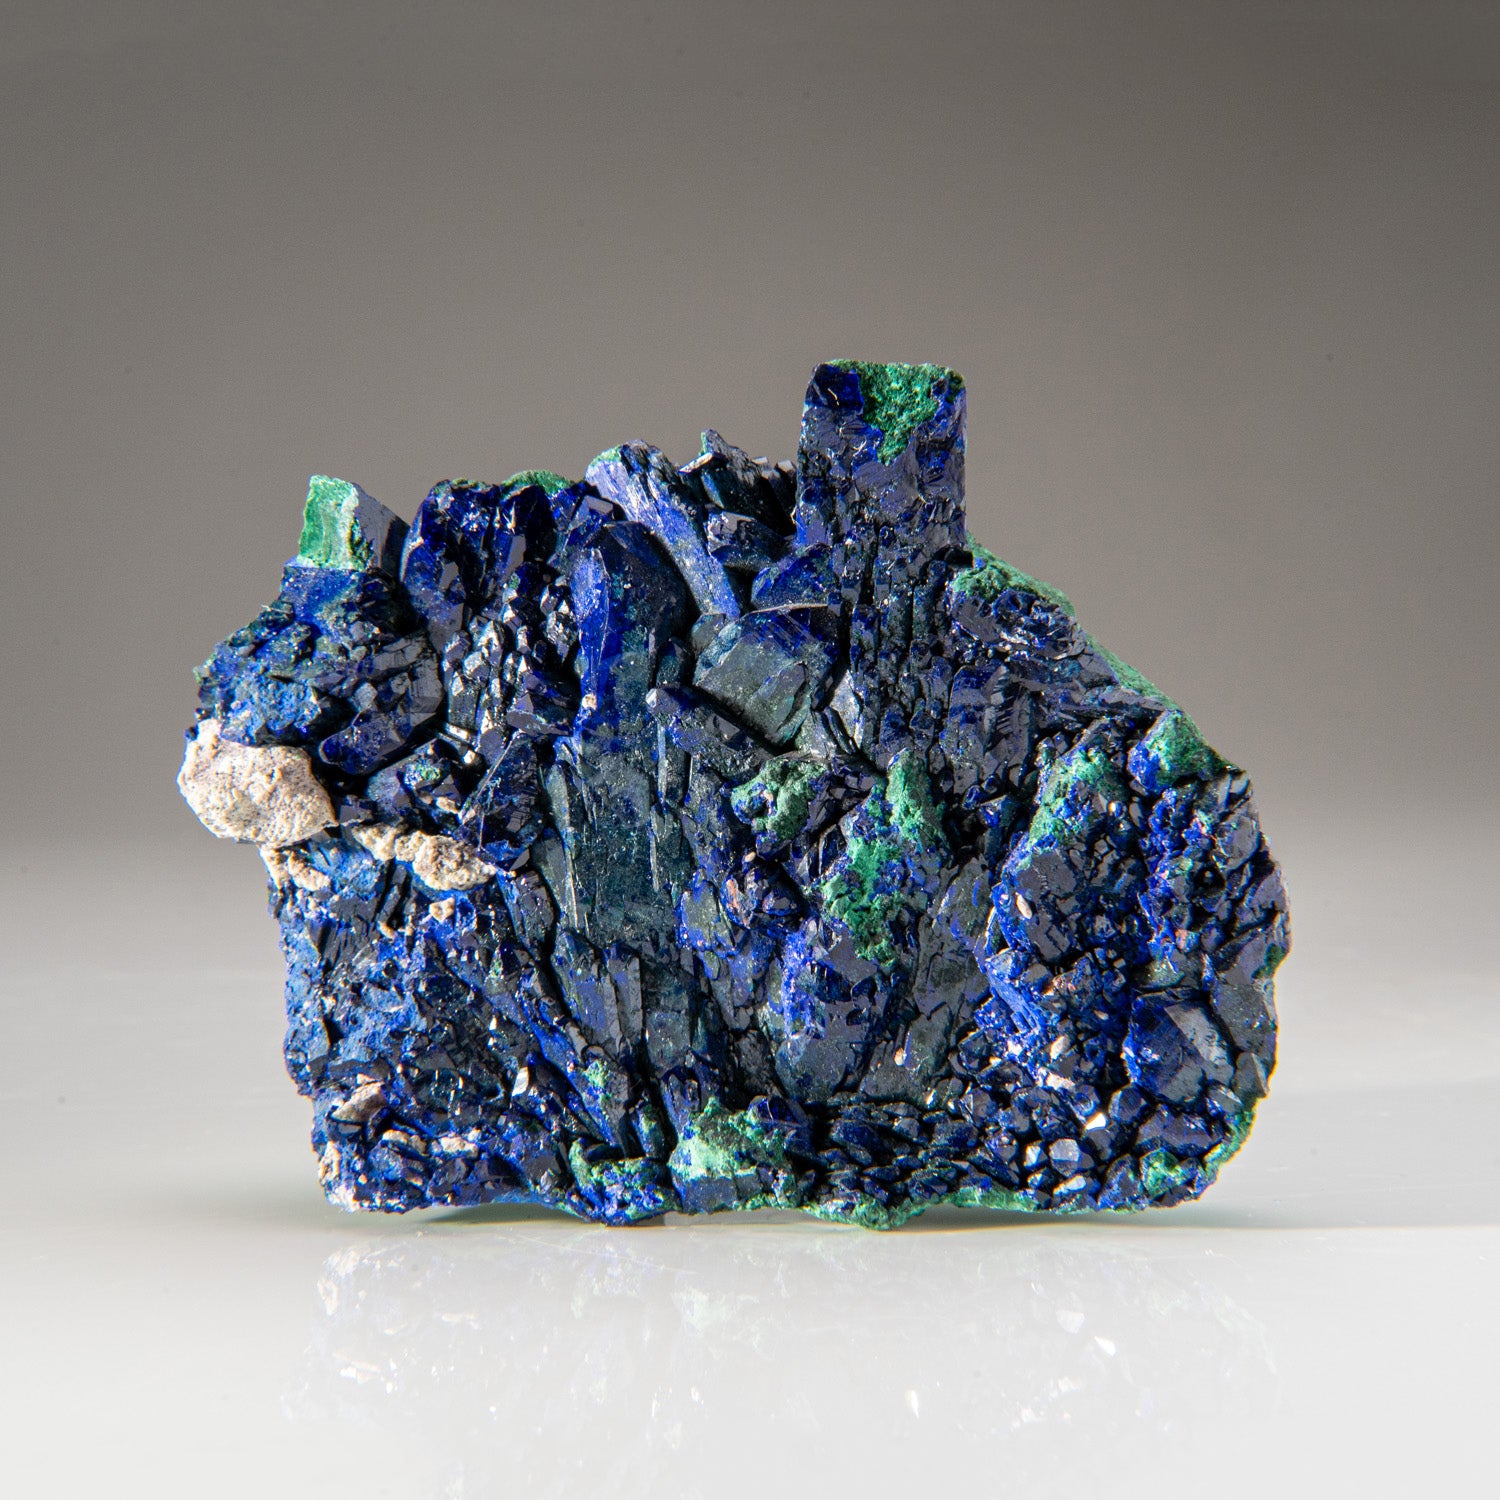 Azurite and Malachite from Liufengshan Mine, Guichi, Anhui Province, China